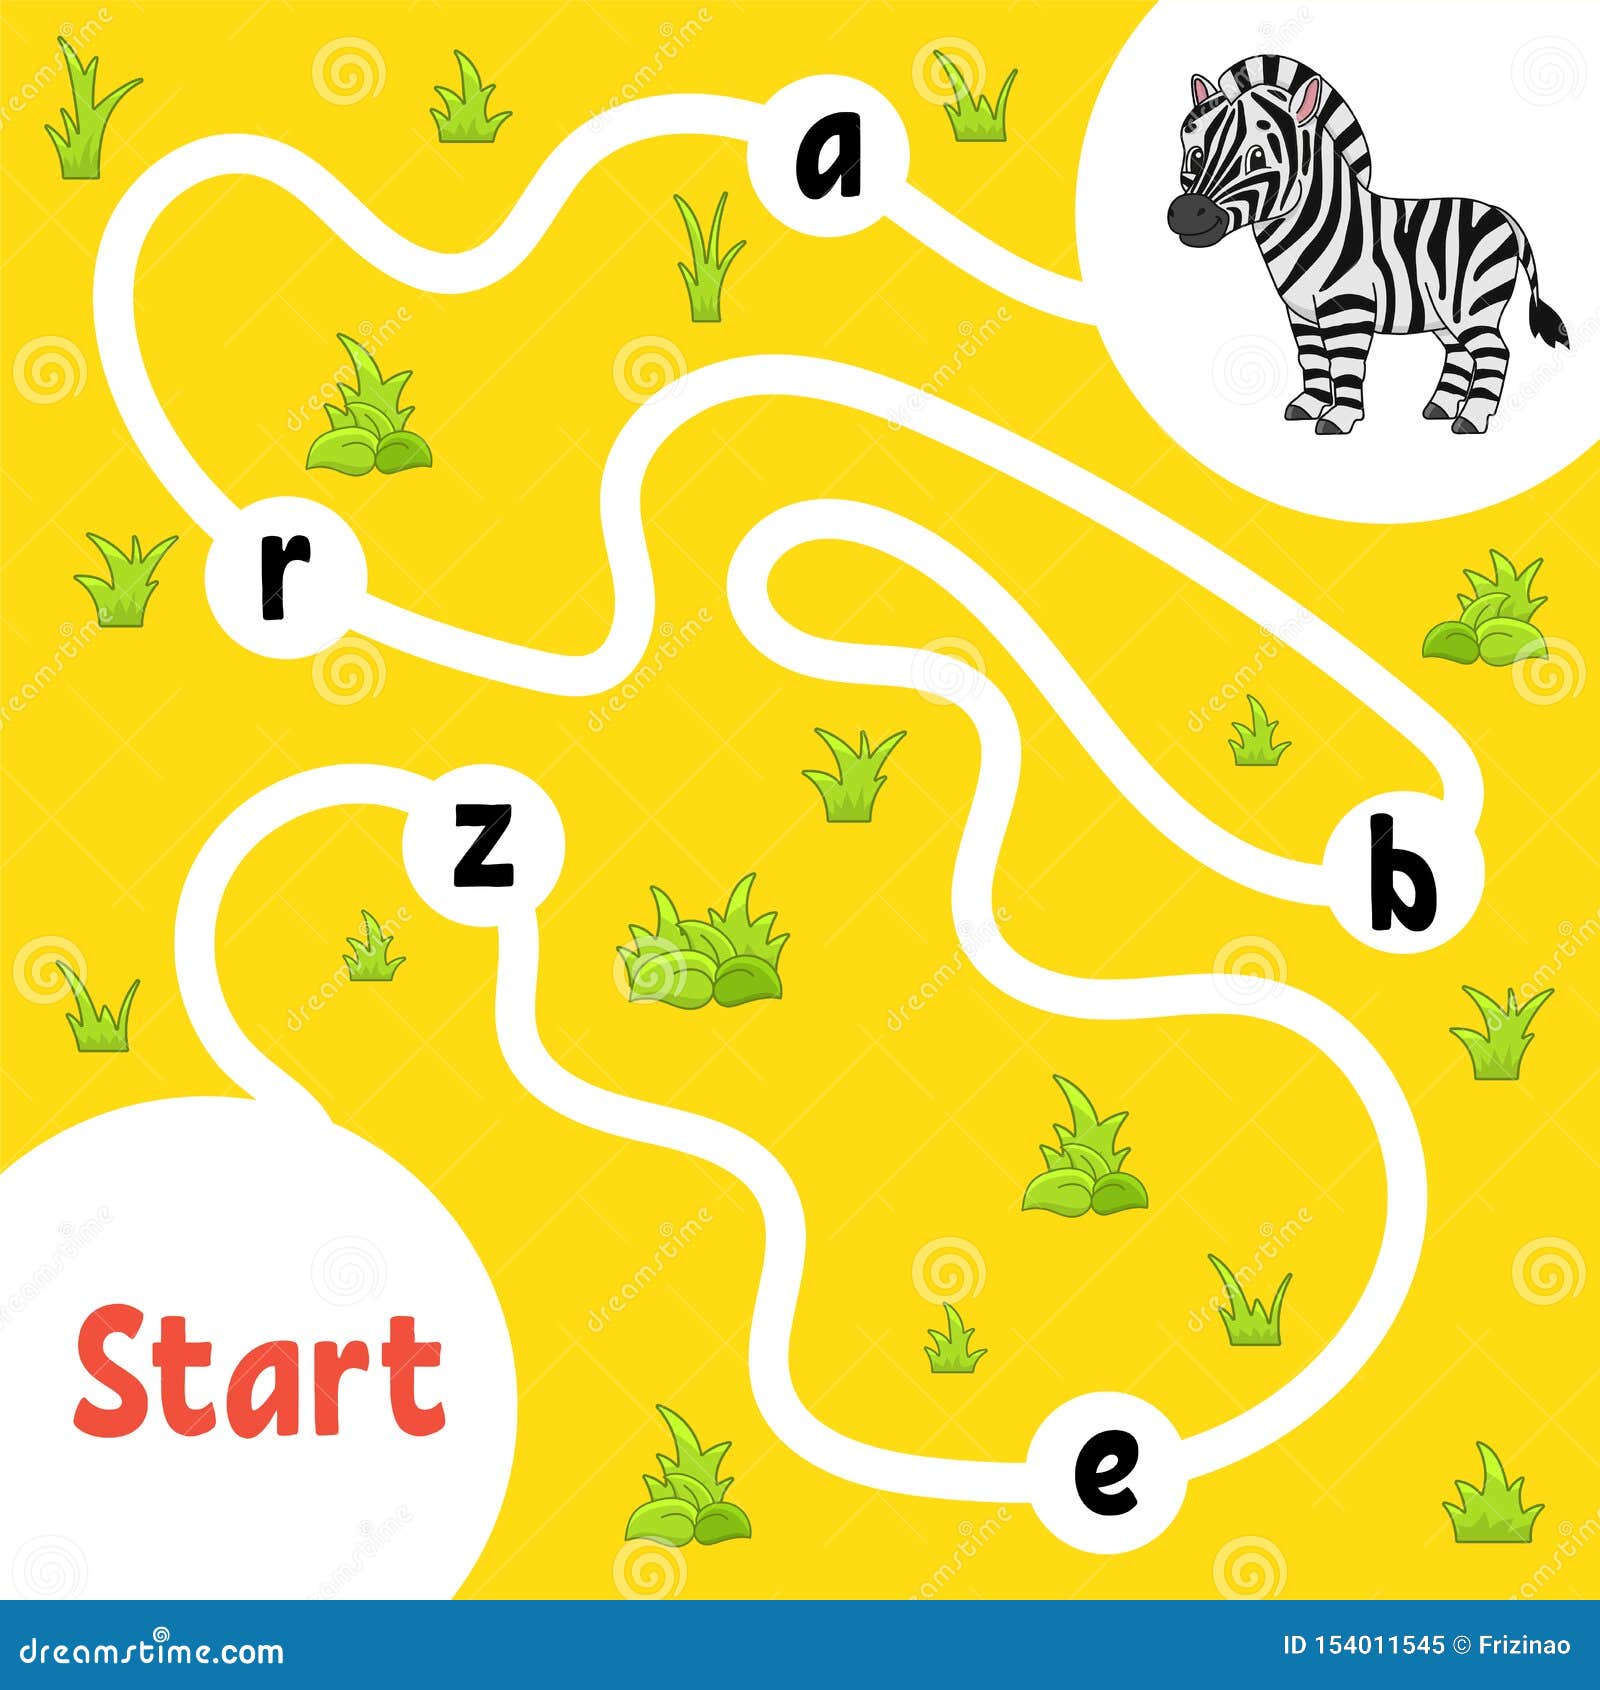 Logic Puzzle Game. Learning Words for Kids. Find the Hidden Name. Education  Developing Worksheet Stock Illustration - Illustration of successively,  equus: 154011545